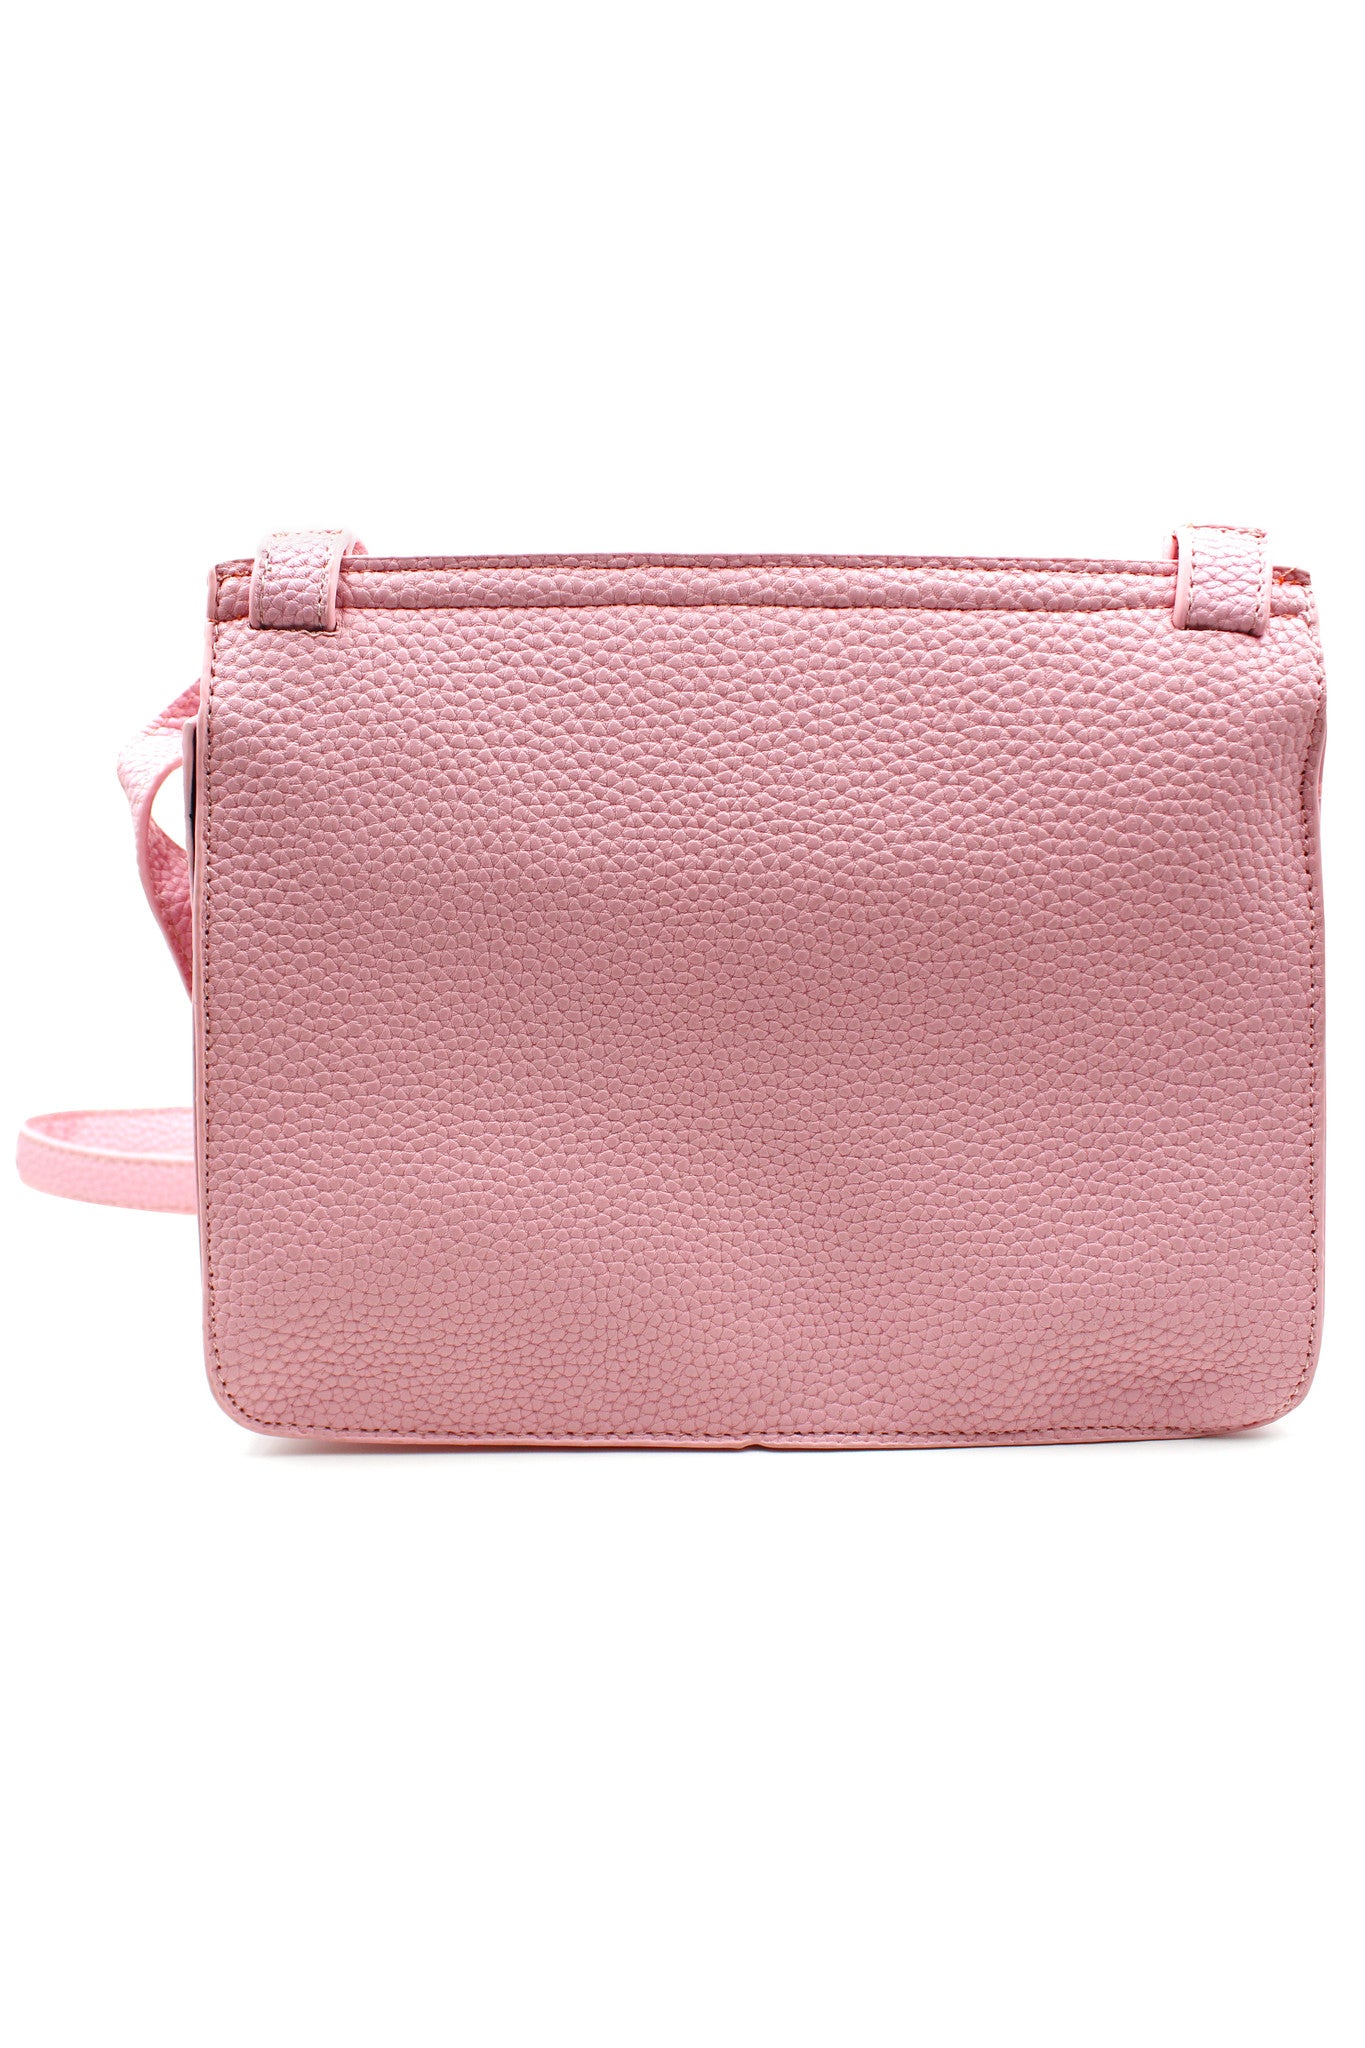 Pebble leather Sweet small purse – Ocean Fashion